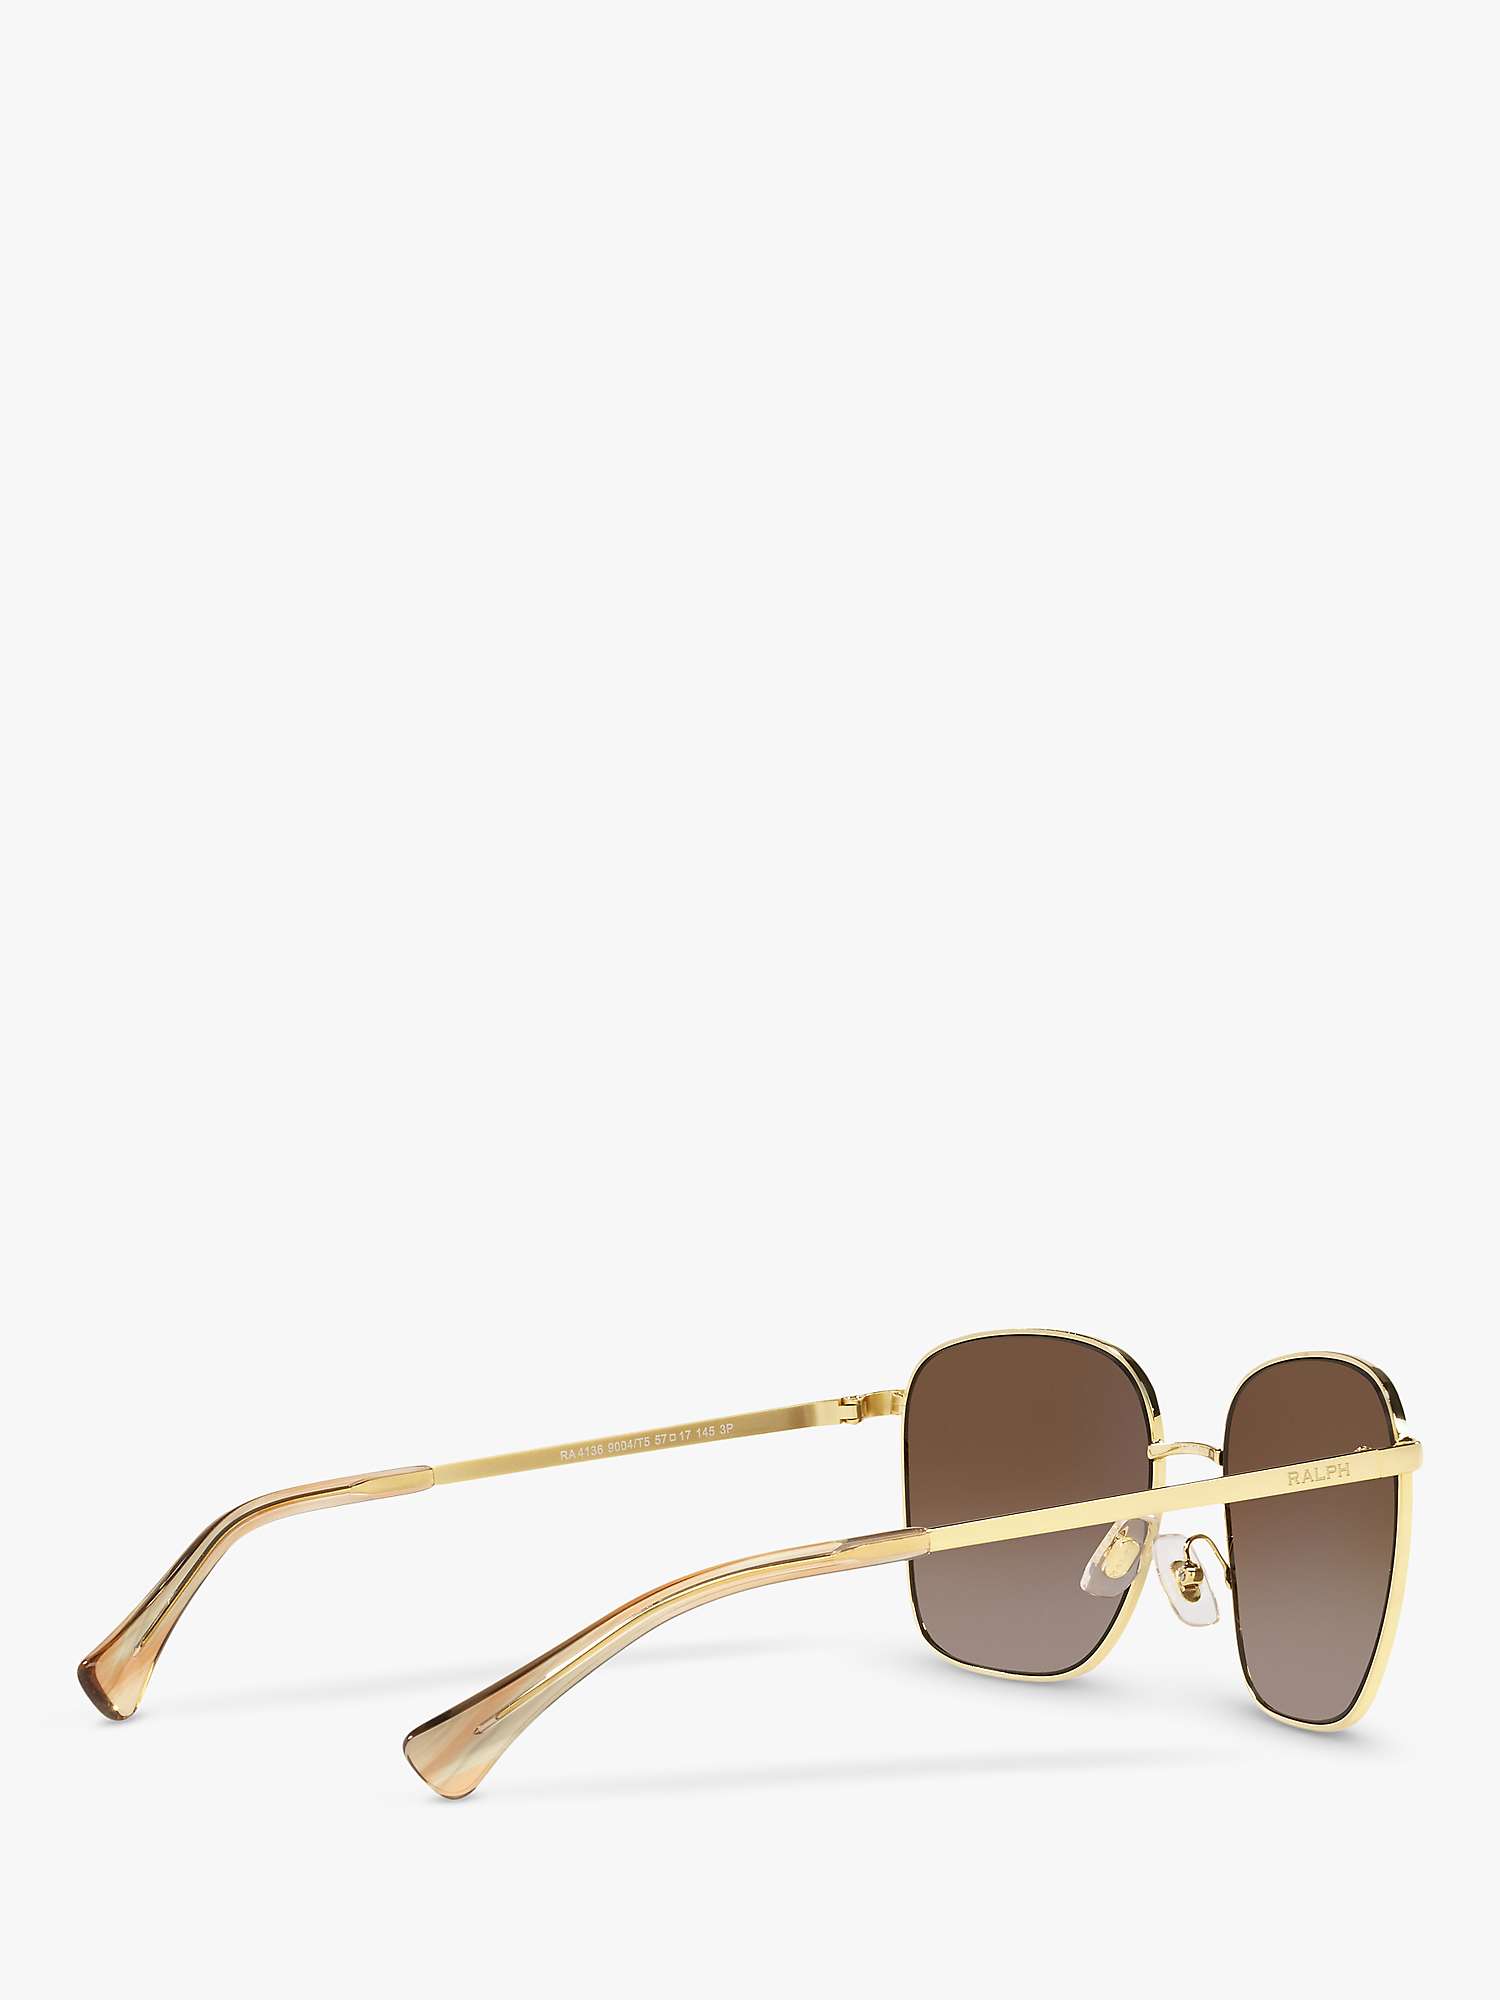 Buy Ralph RA4136 Women's Square Shape Polarised Sunglasses, Gold/Brown Online at johnlewis.com